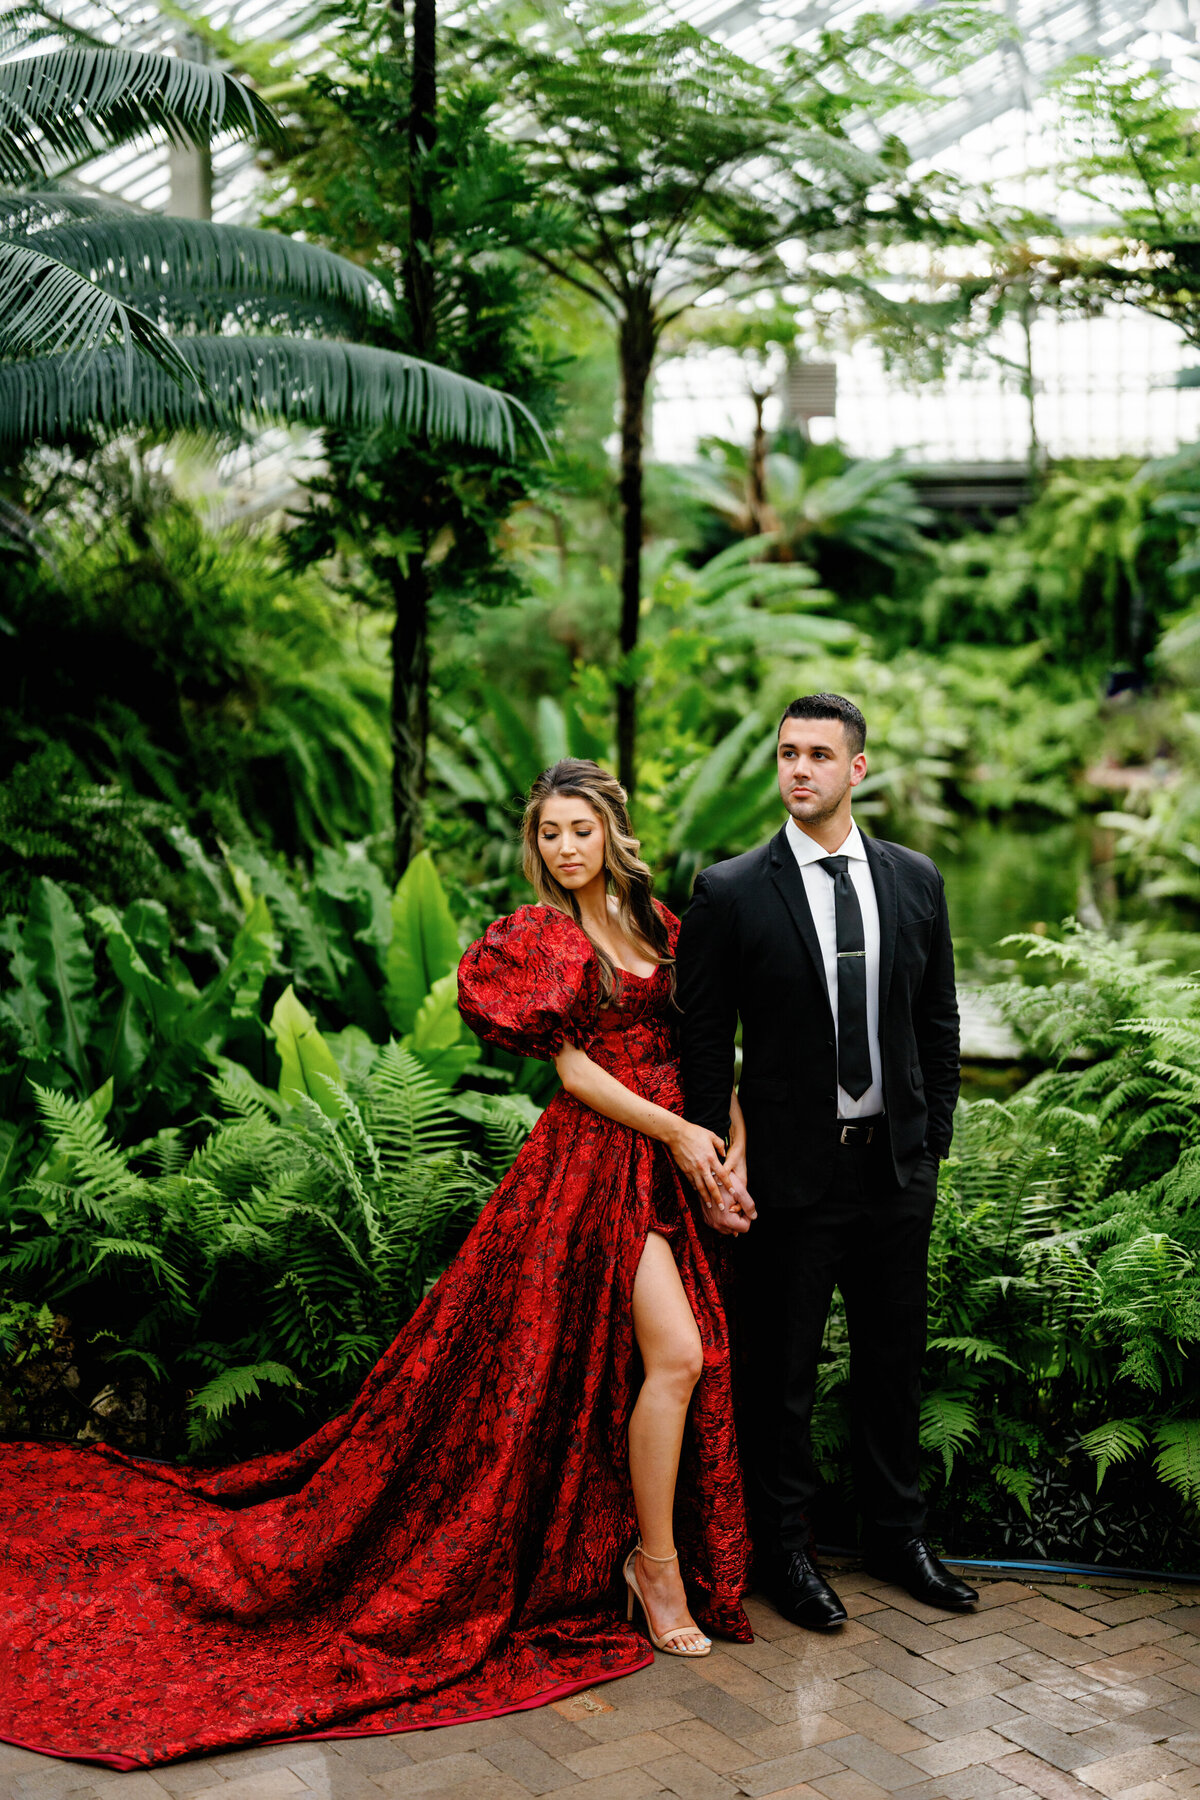 Aspen-Avenue-Chicago-Wedding-Photographer-Garfield-Conservatory-Engagement-Session-Erika-Alexis-Beauty-Jamie-Jordan-Artistry-Utah-Gowns-Red-Dress-Luxury-Timeless-Elegant-165